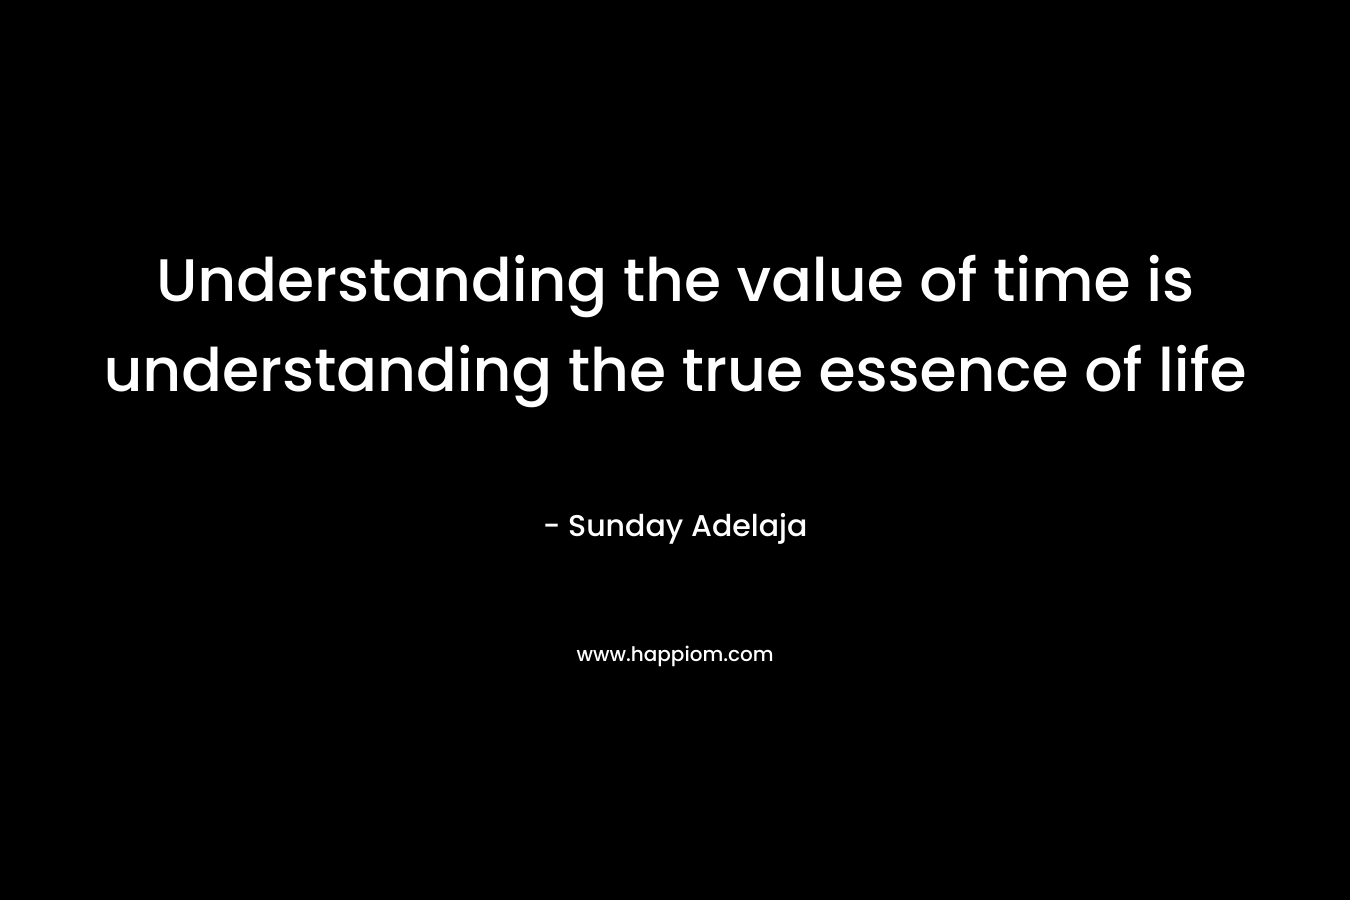 Understanding the value of time is understanding the true essence of life